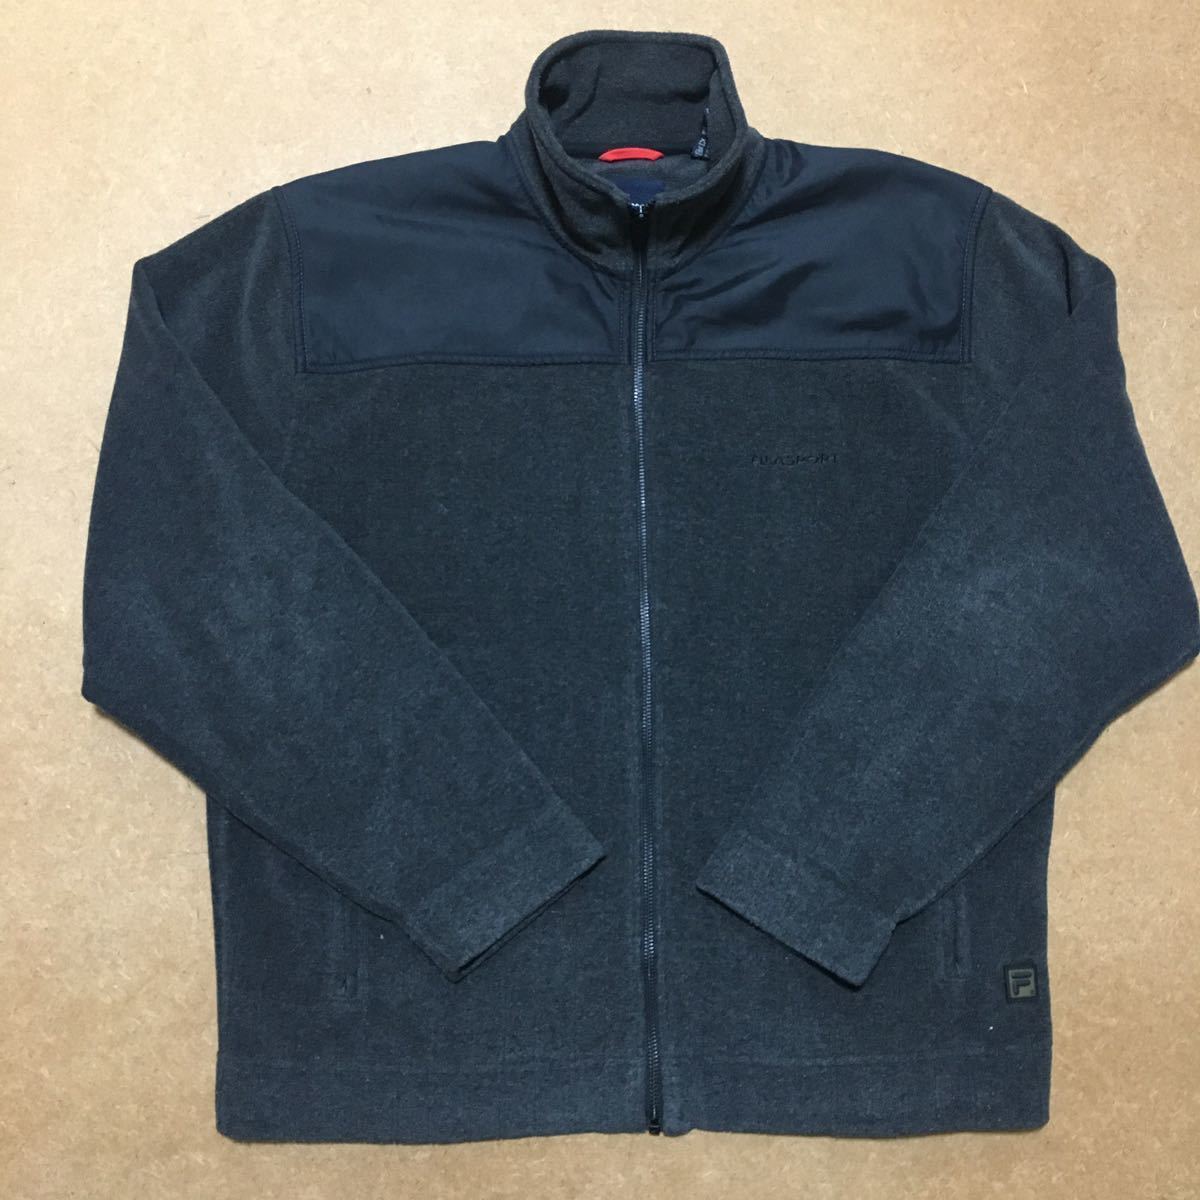 FILA SPORTS jacket Zip up sweater 009-1 dark gray black men's M filler sport 